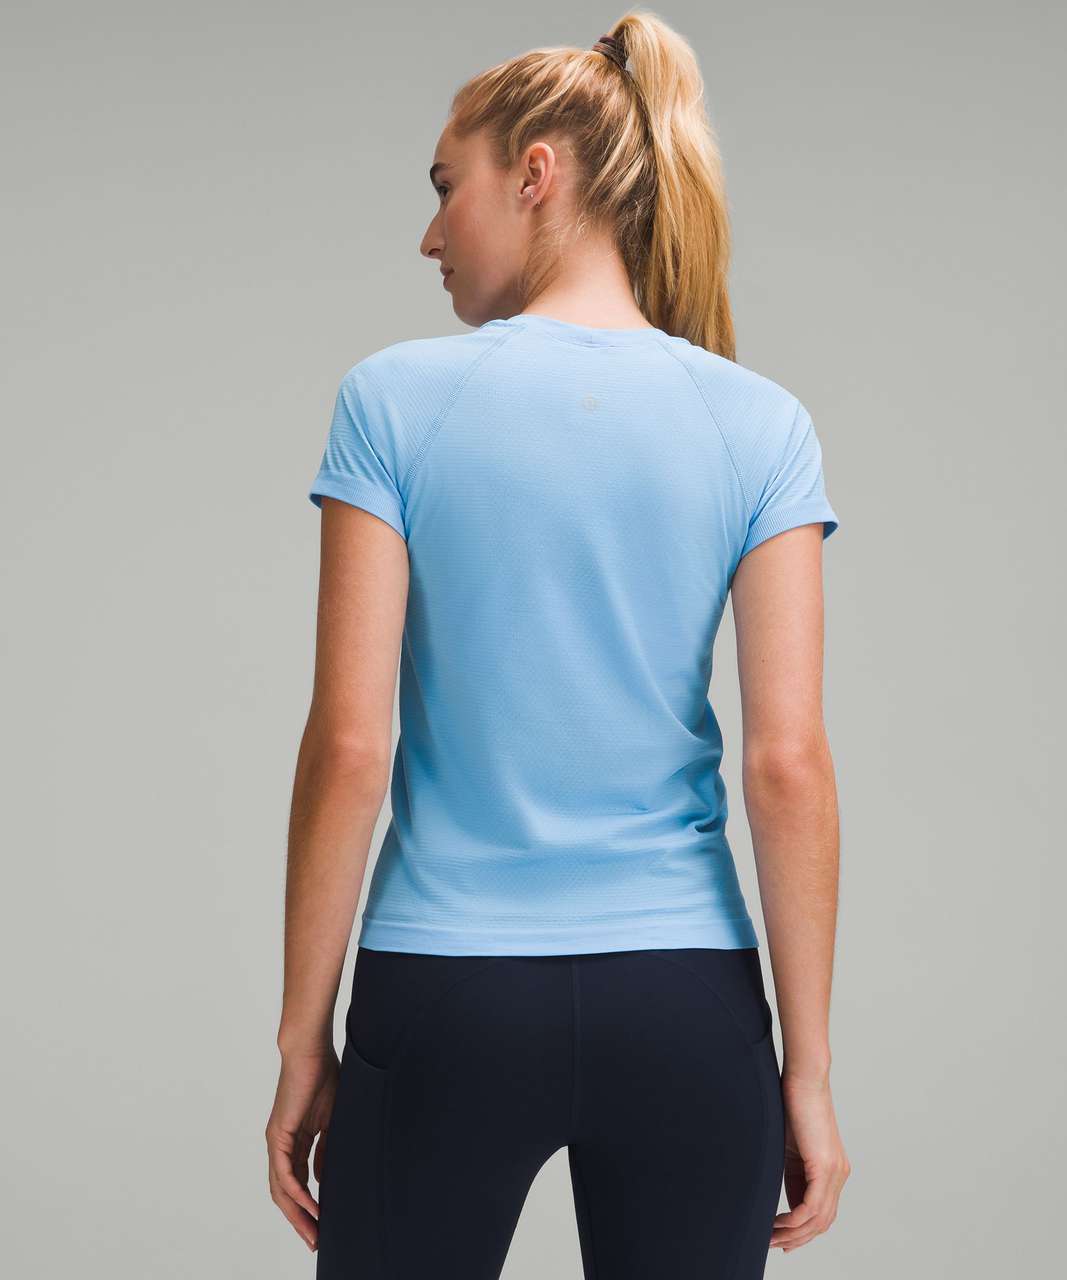 Lululemon Swiftly Tech Short-Sleeve Shirt 2.0 *Race Length - Aero Blue / Aero Blue